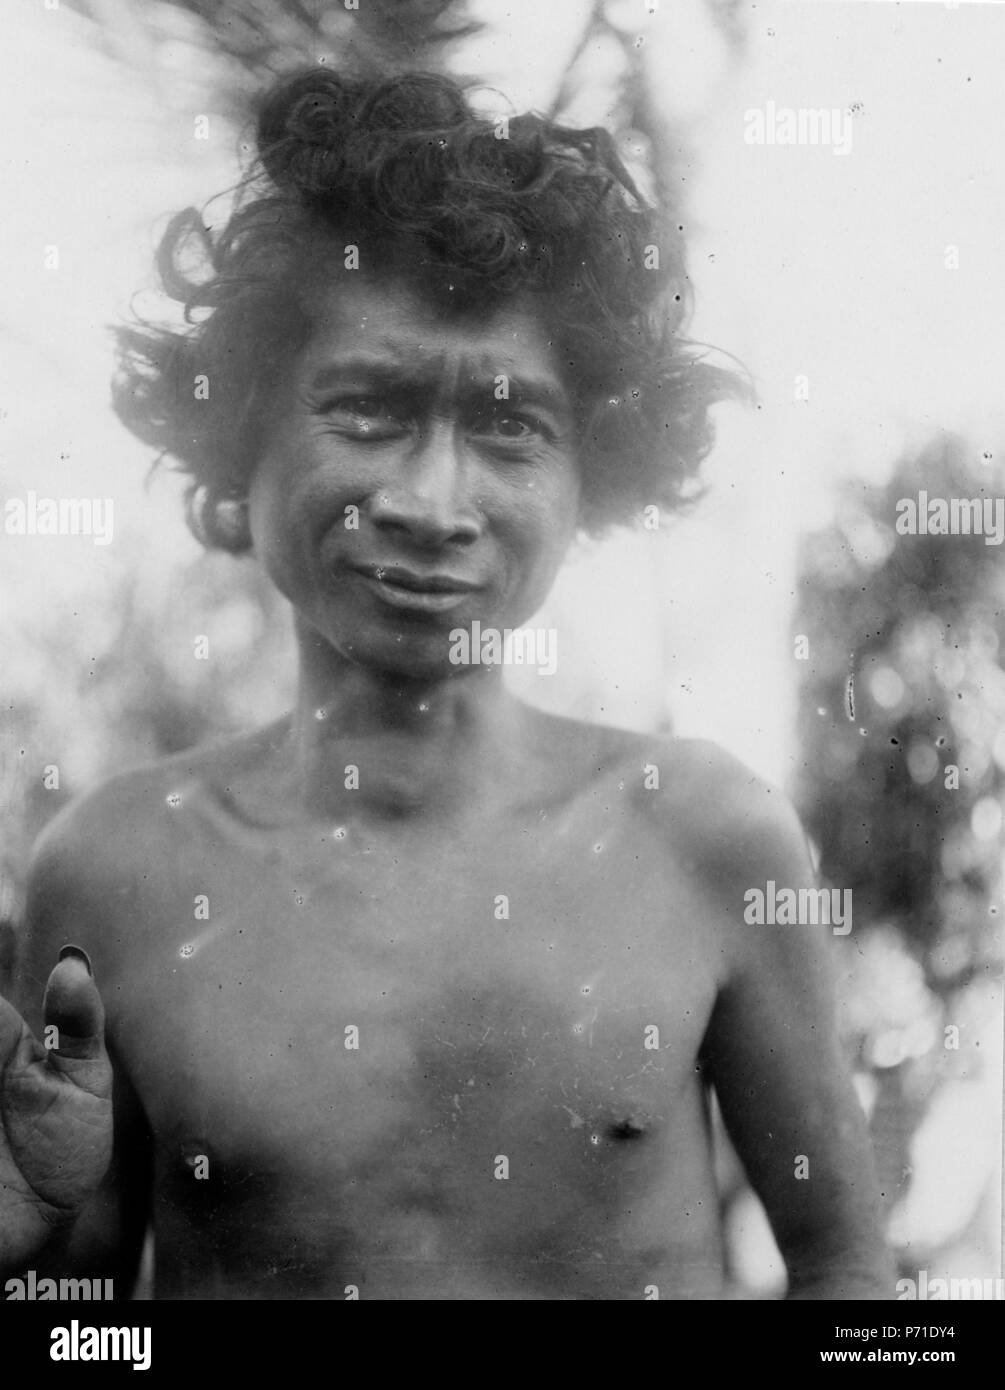 31 Inföding vid namn Nonto. Toleman. Sulawesi, Kulawi. Indonesien - SMVK - 000248 Stock Photo